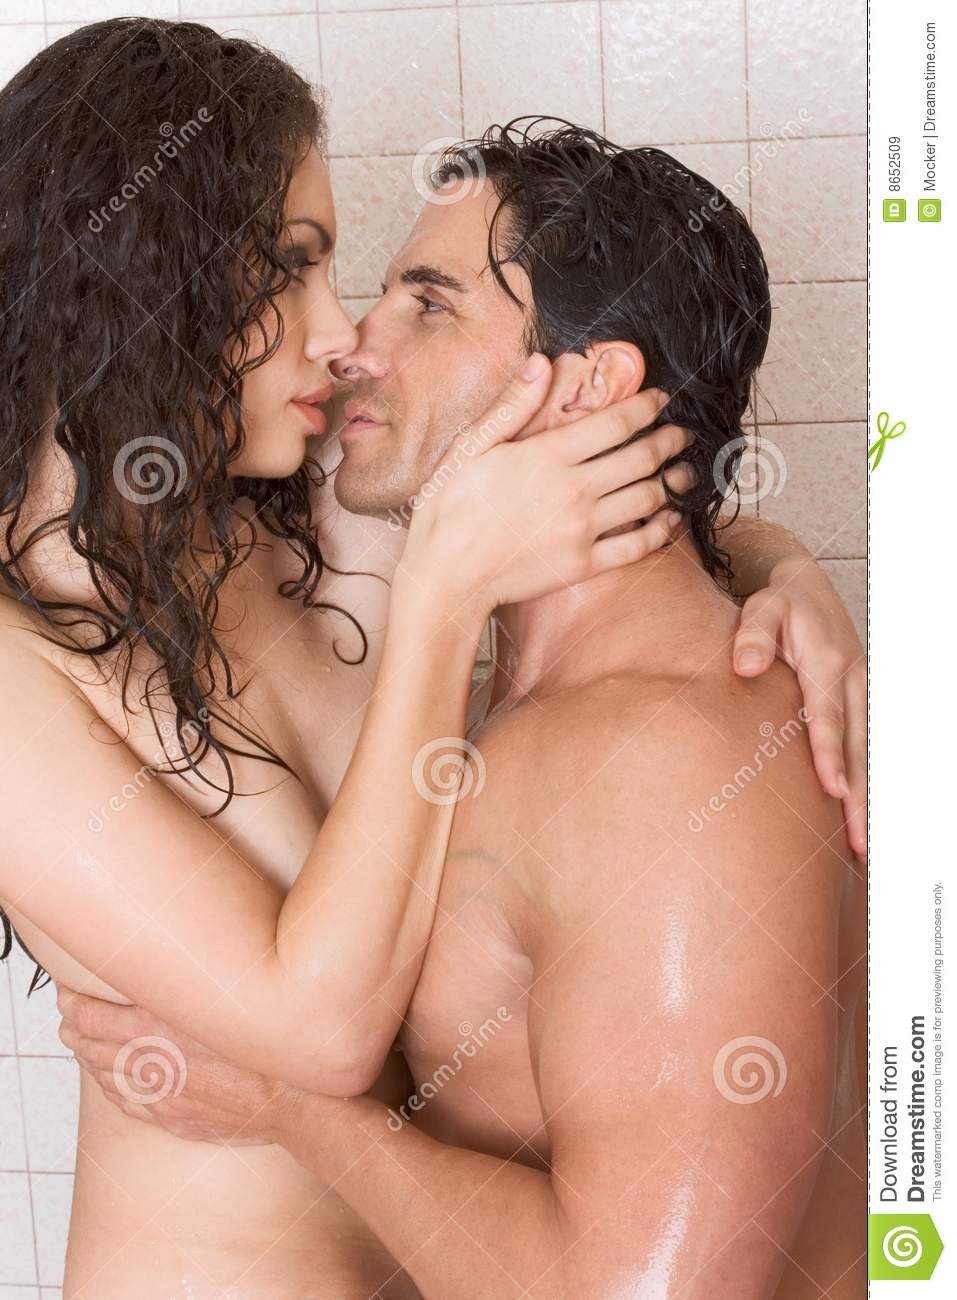 best of Girl shower Naked couple in